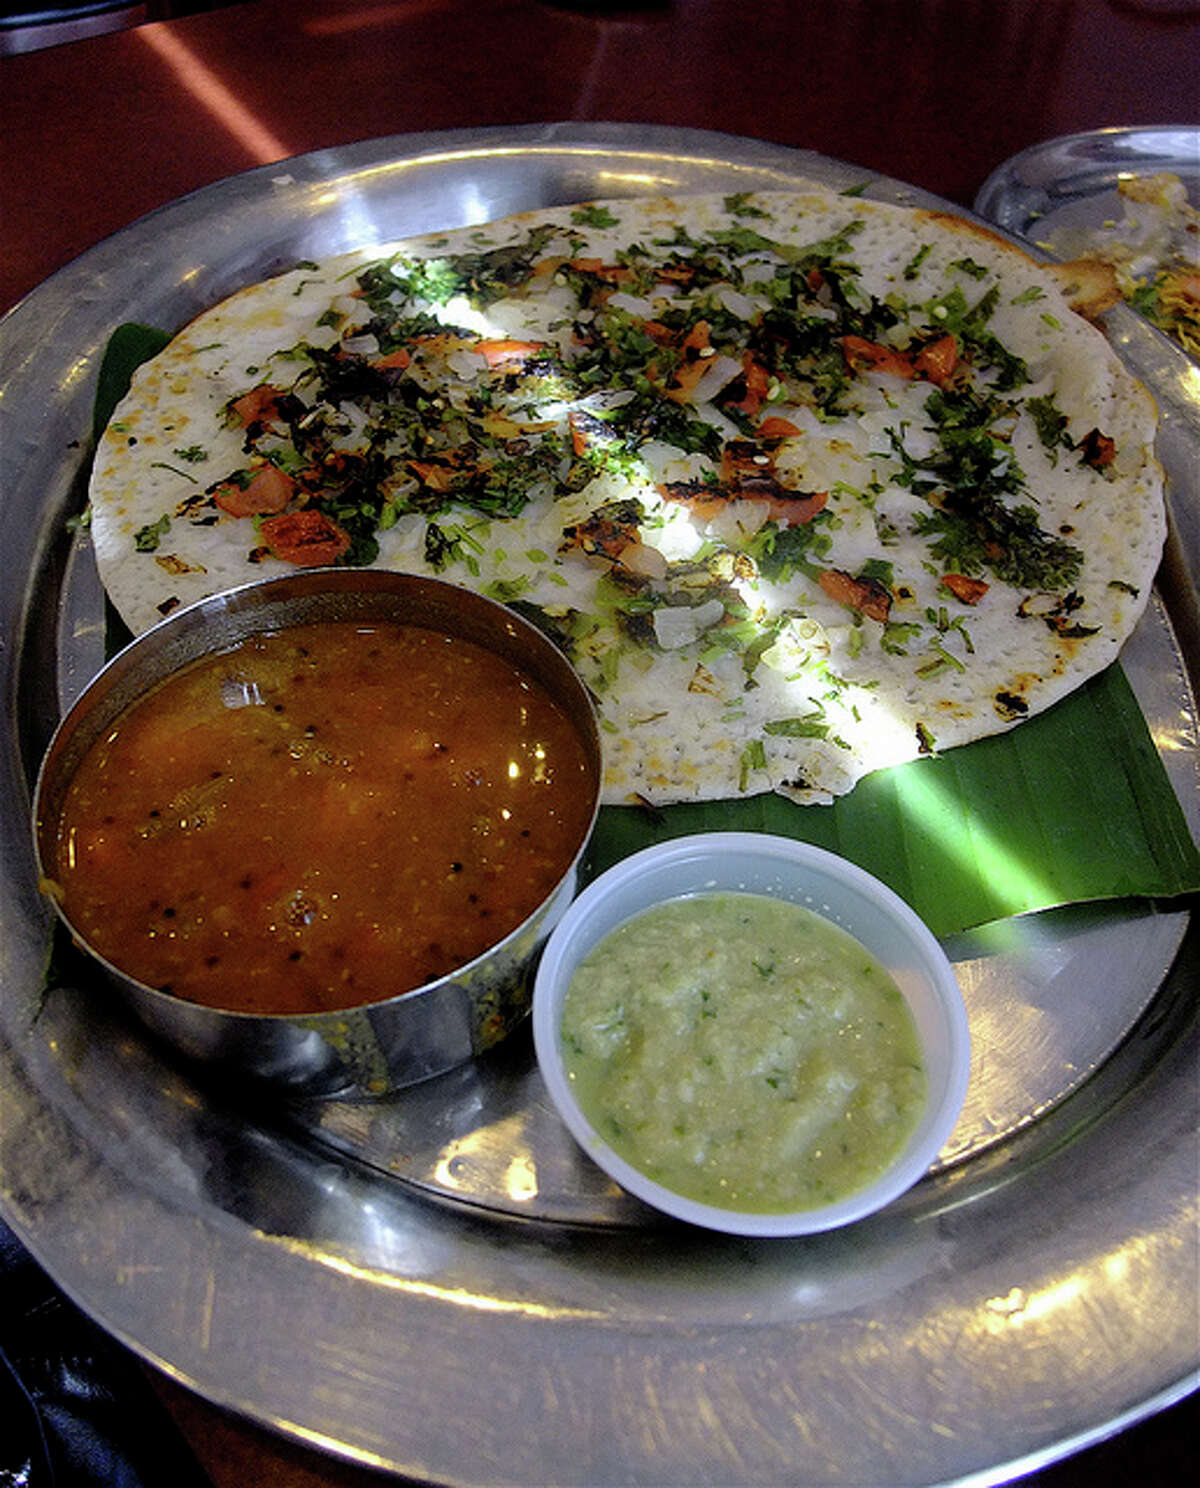 Spicy uttipam pancake with sambar and coconut chutney at Shri Balaji Bhavan.